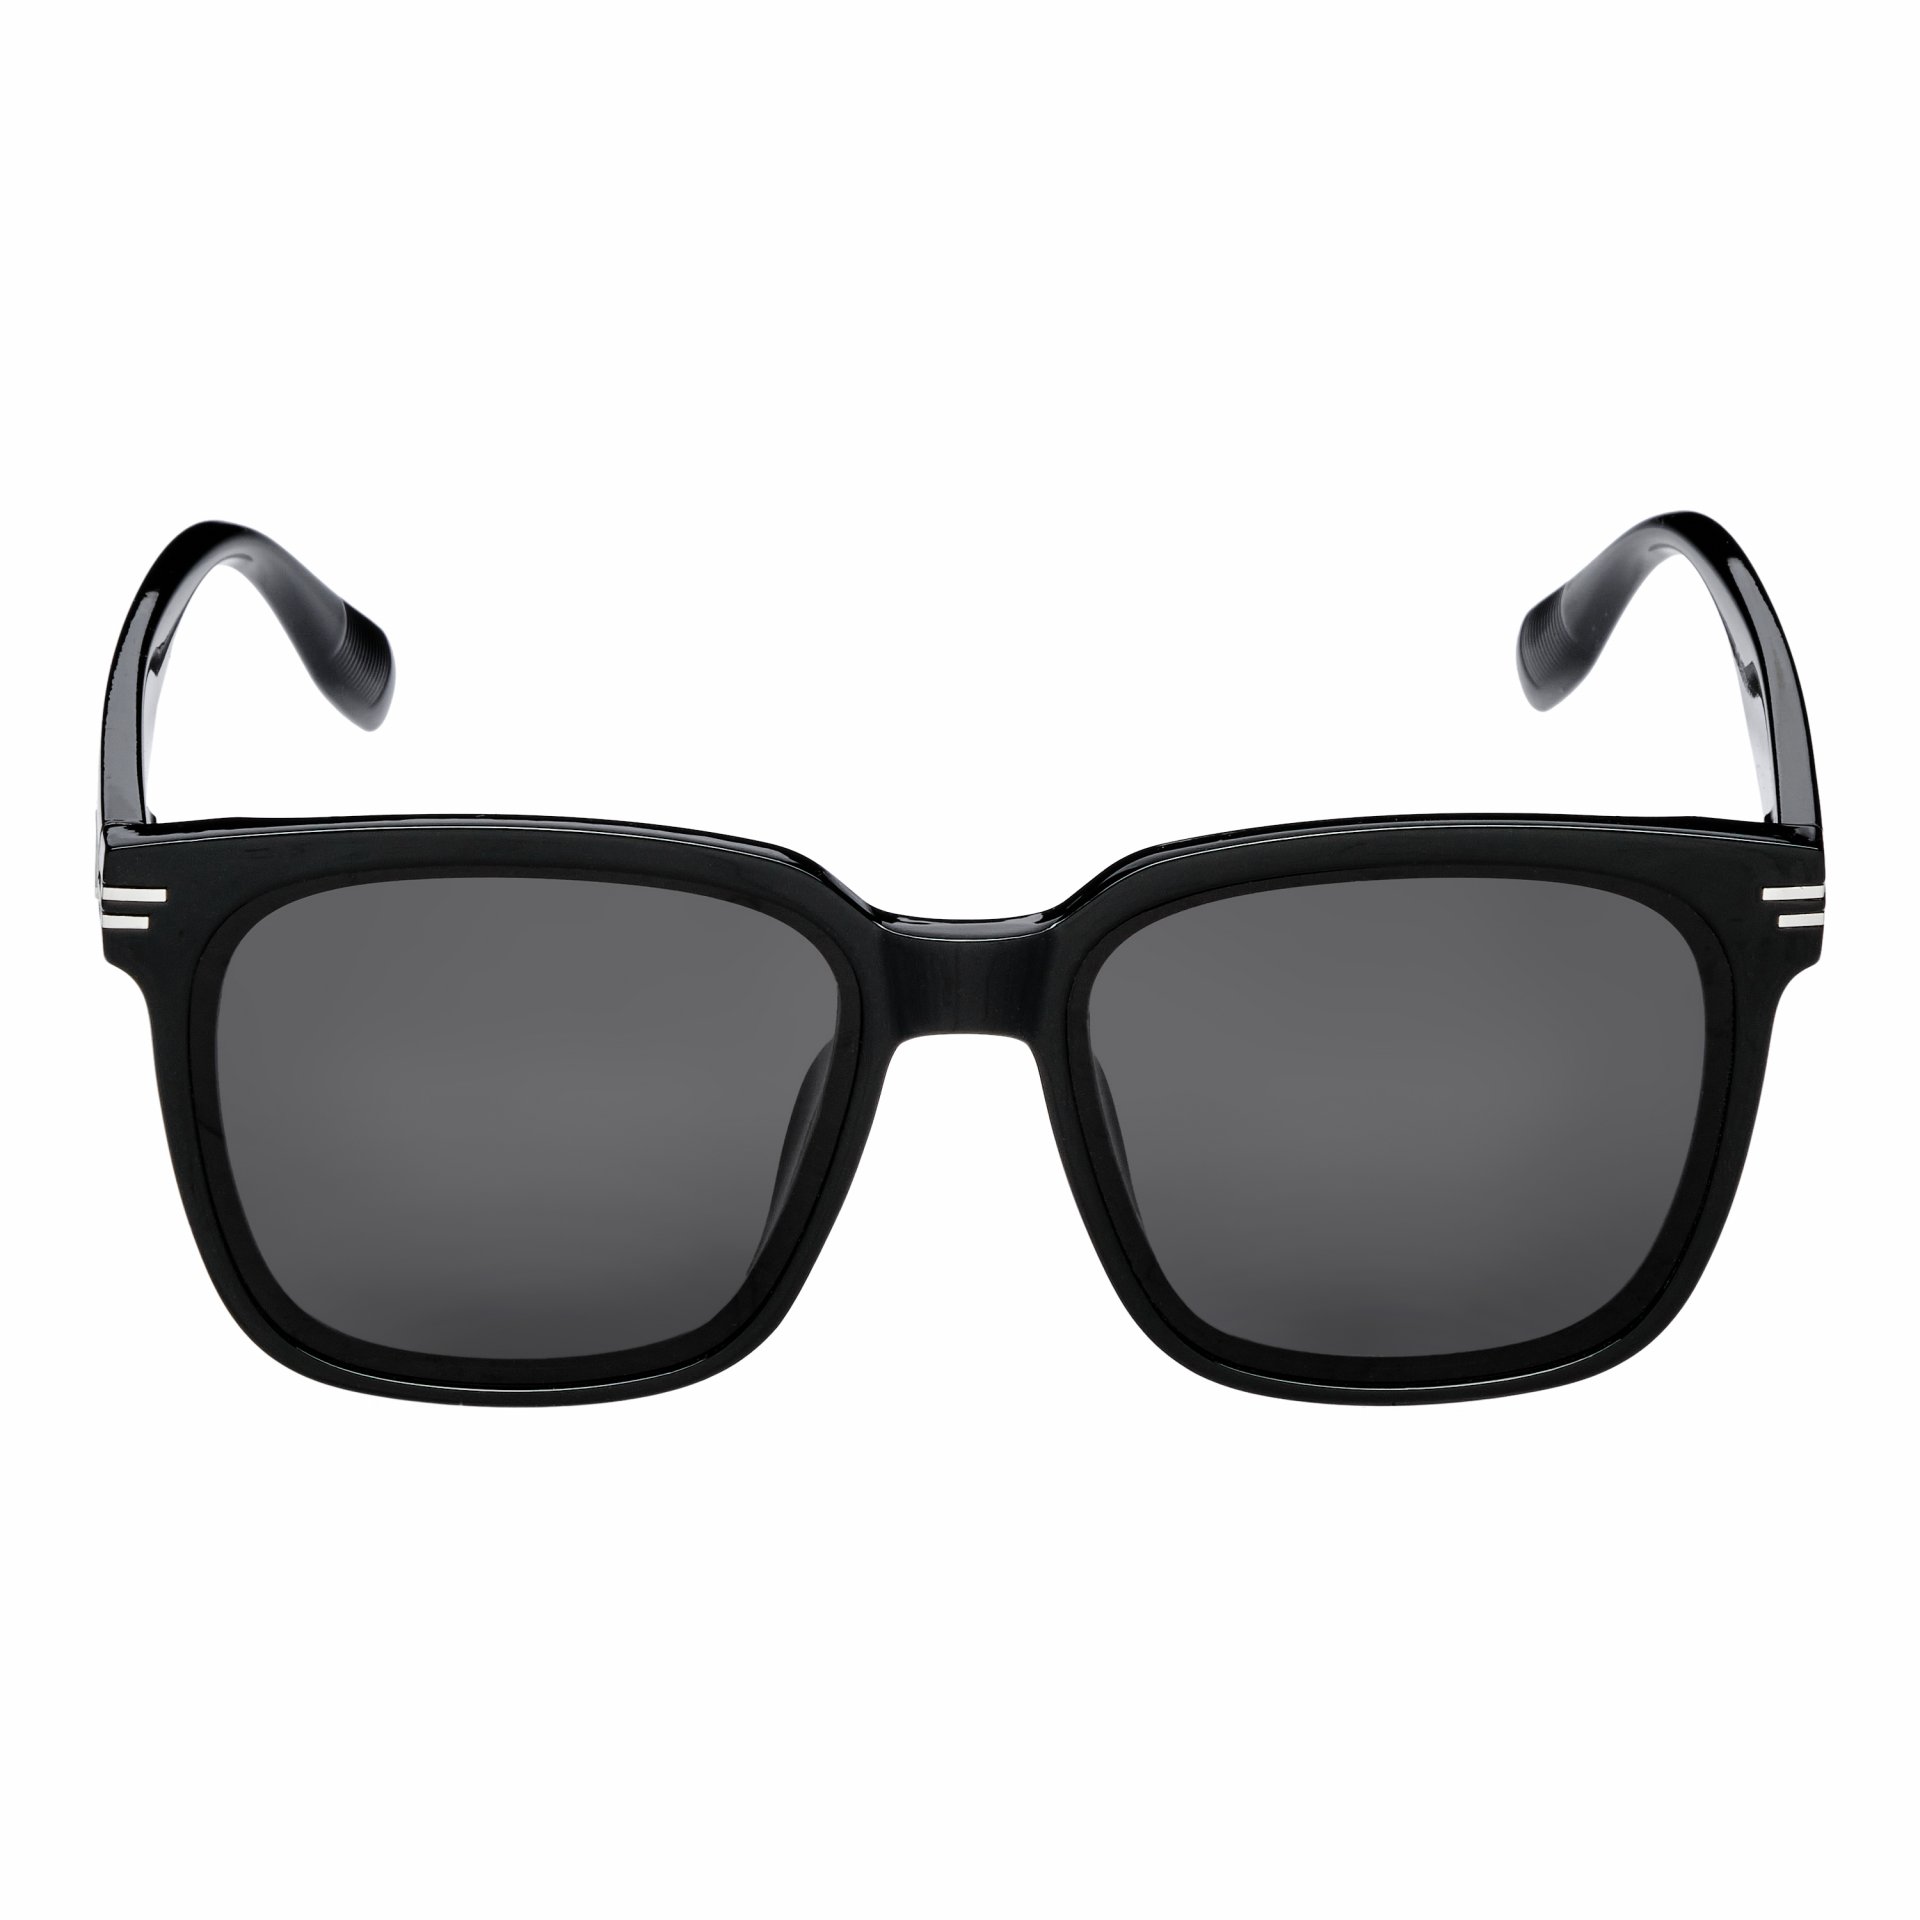 Marco Polo Sunglasses รุ่น PS56001 C1 สีดำ